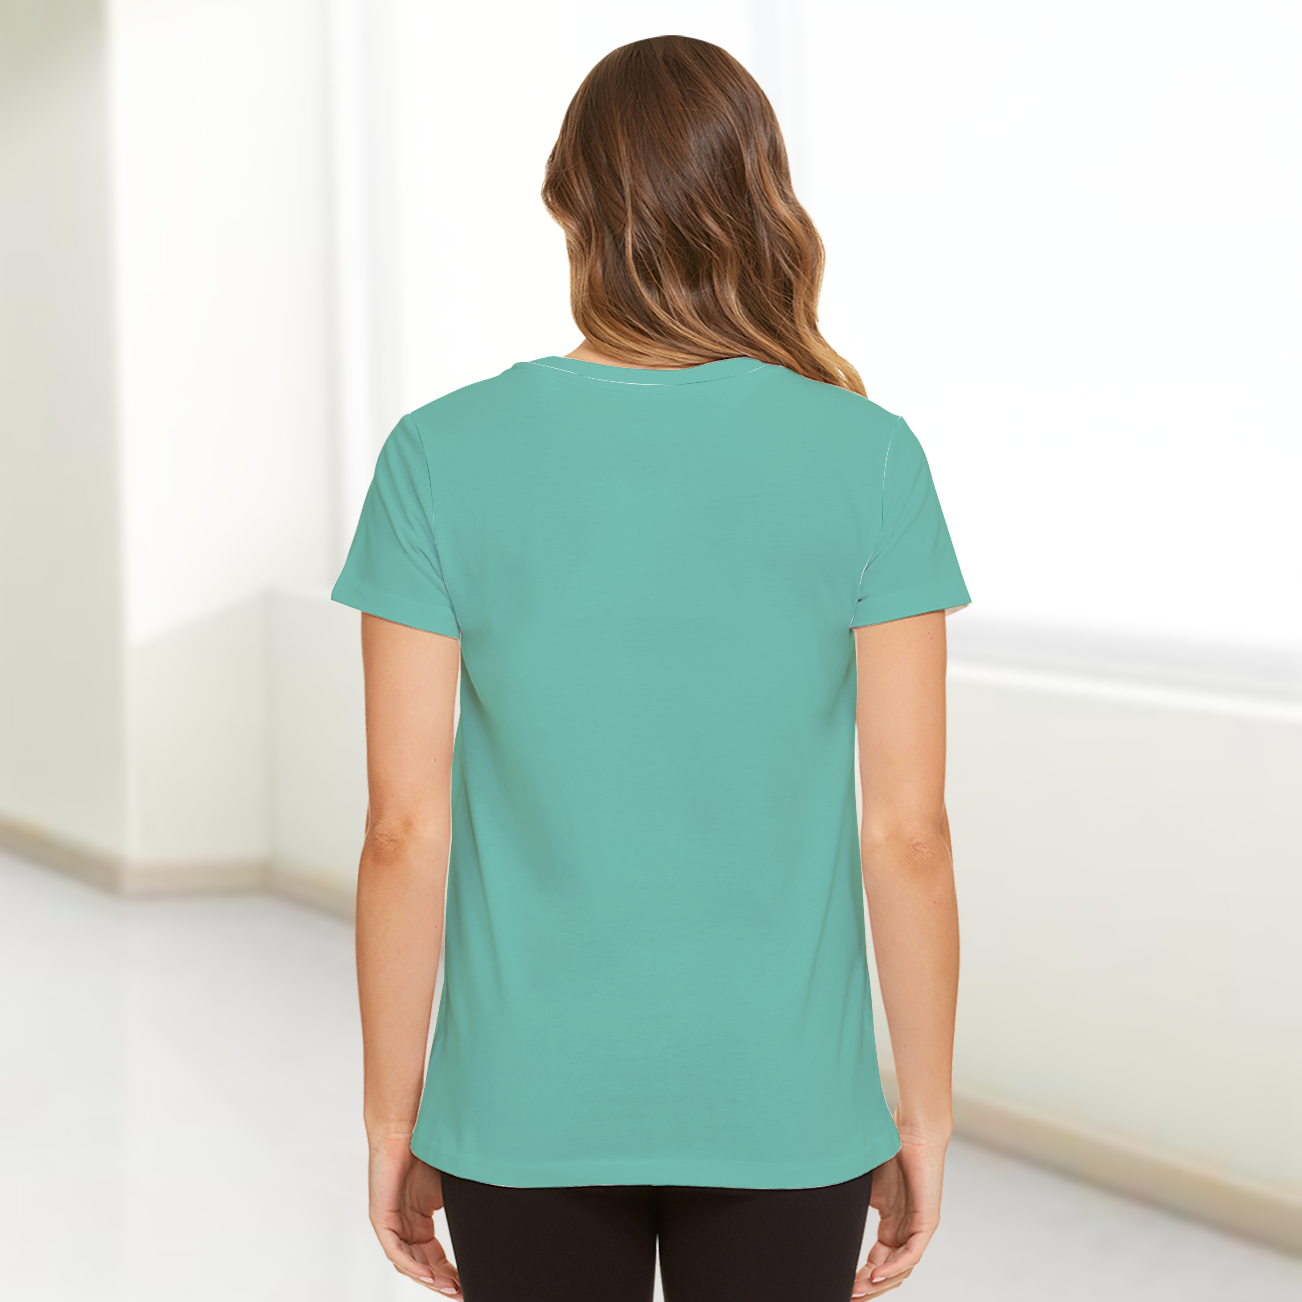 Custom Shirts Unisex All Over Print T-Shirt